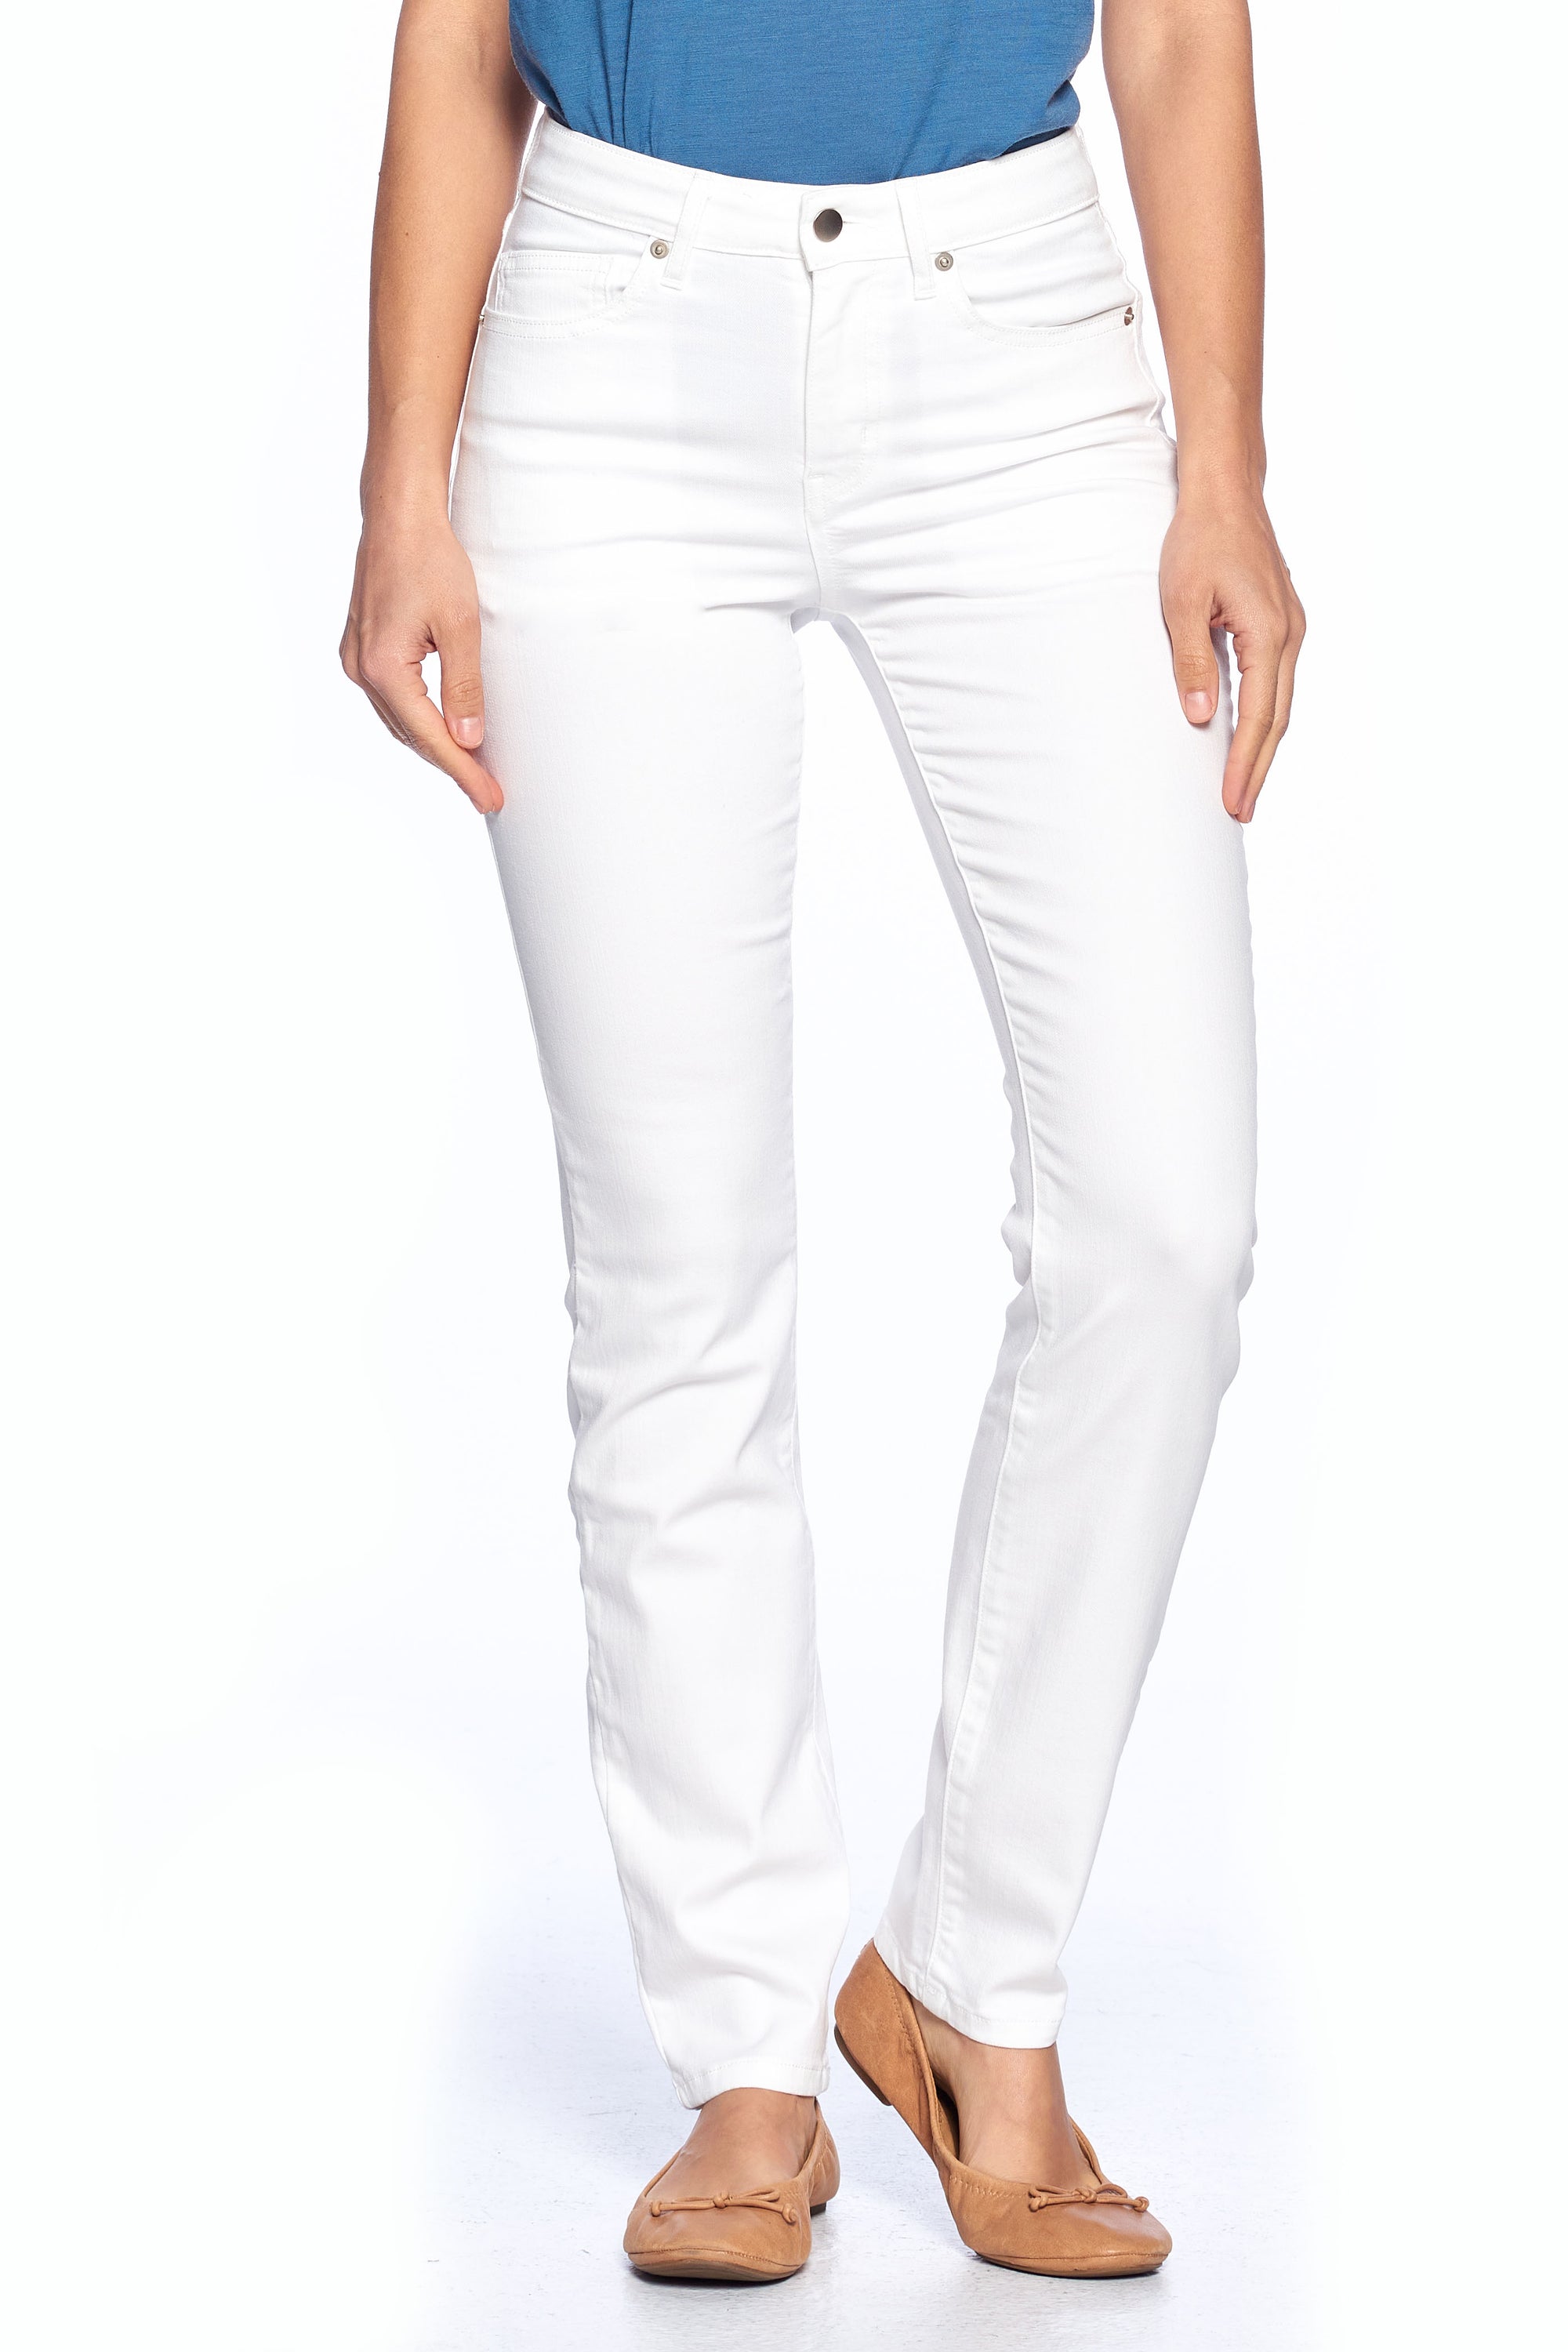 Slim straight comfort fit white travel jeans for women